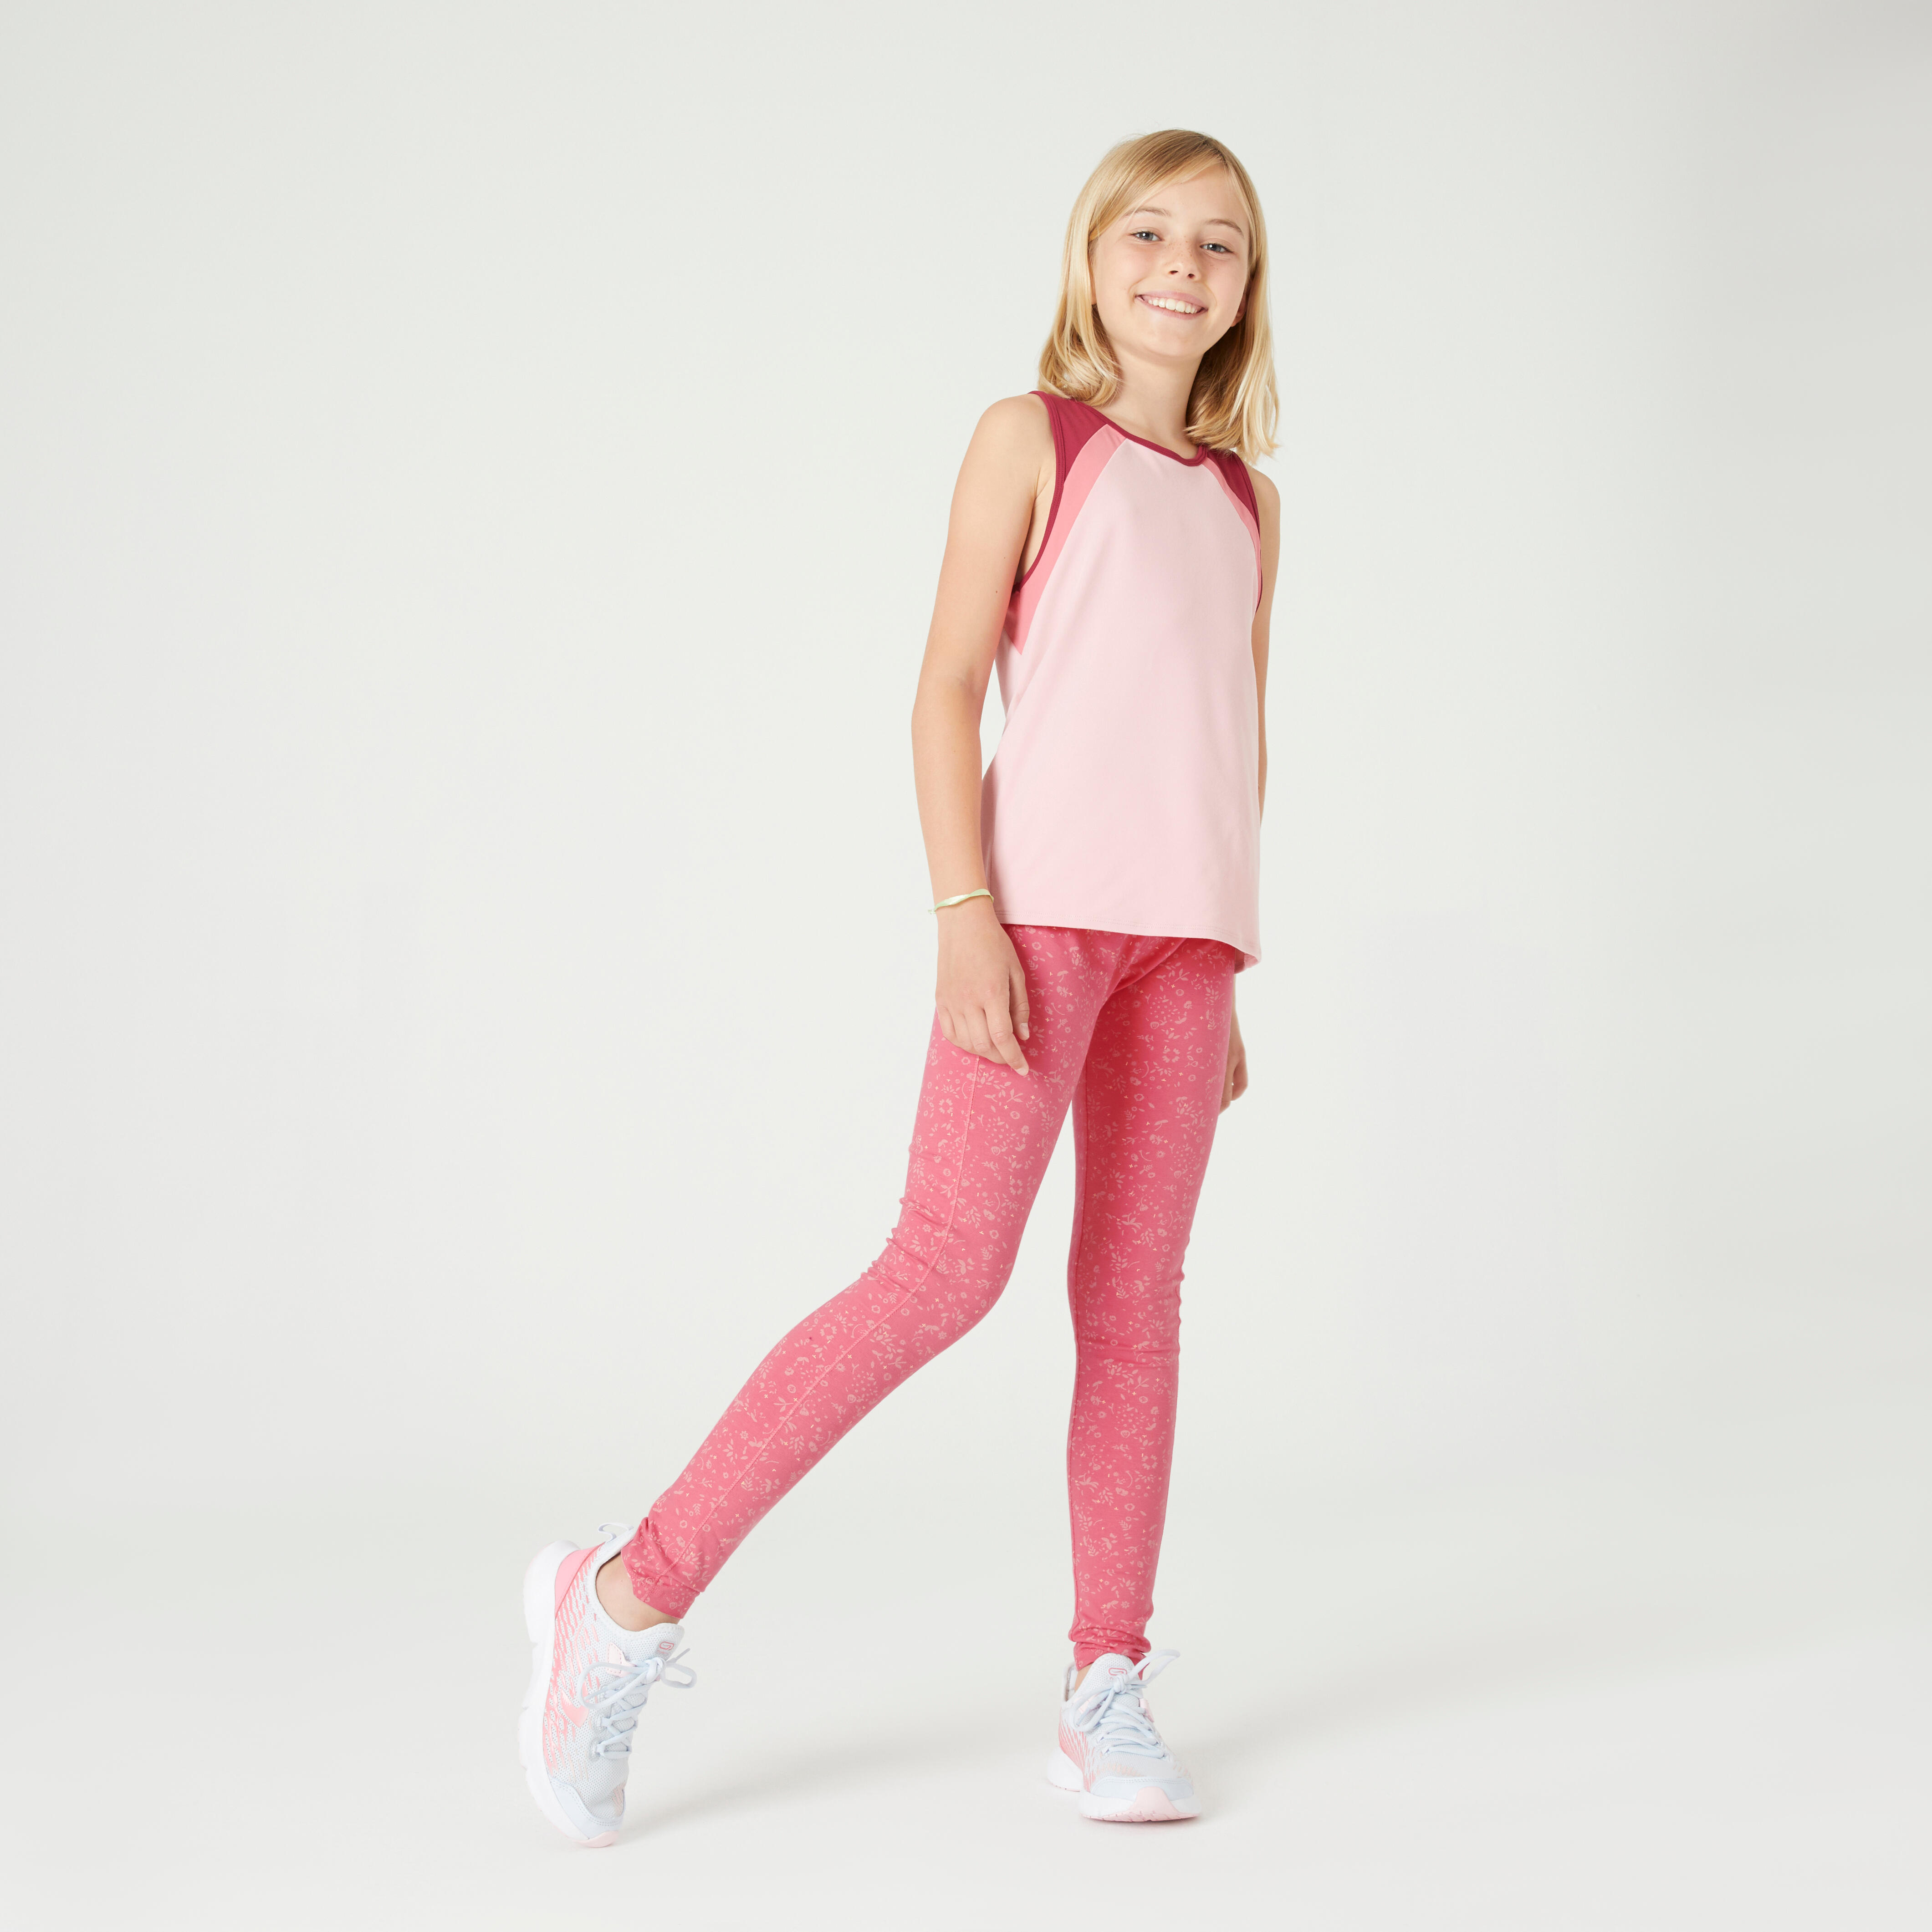 320 cotton leggings - Girls - Pink - Domyos - Decathlon